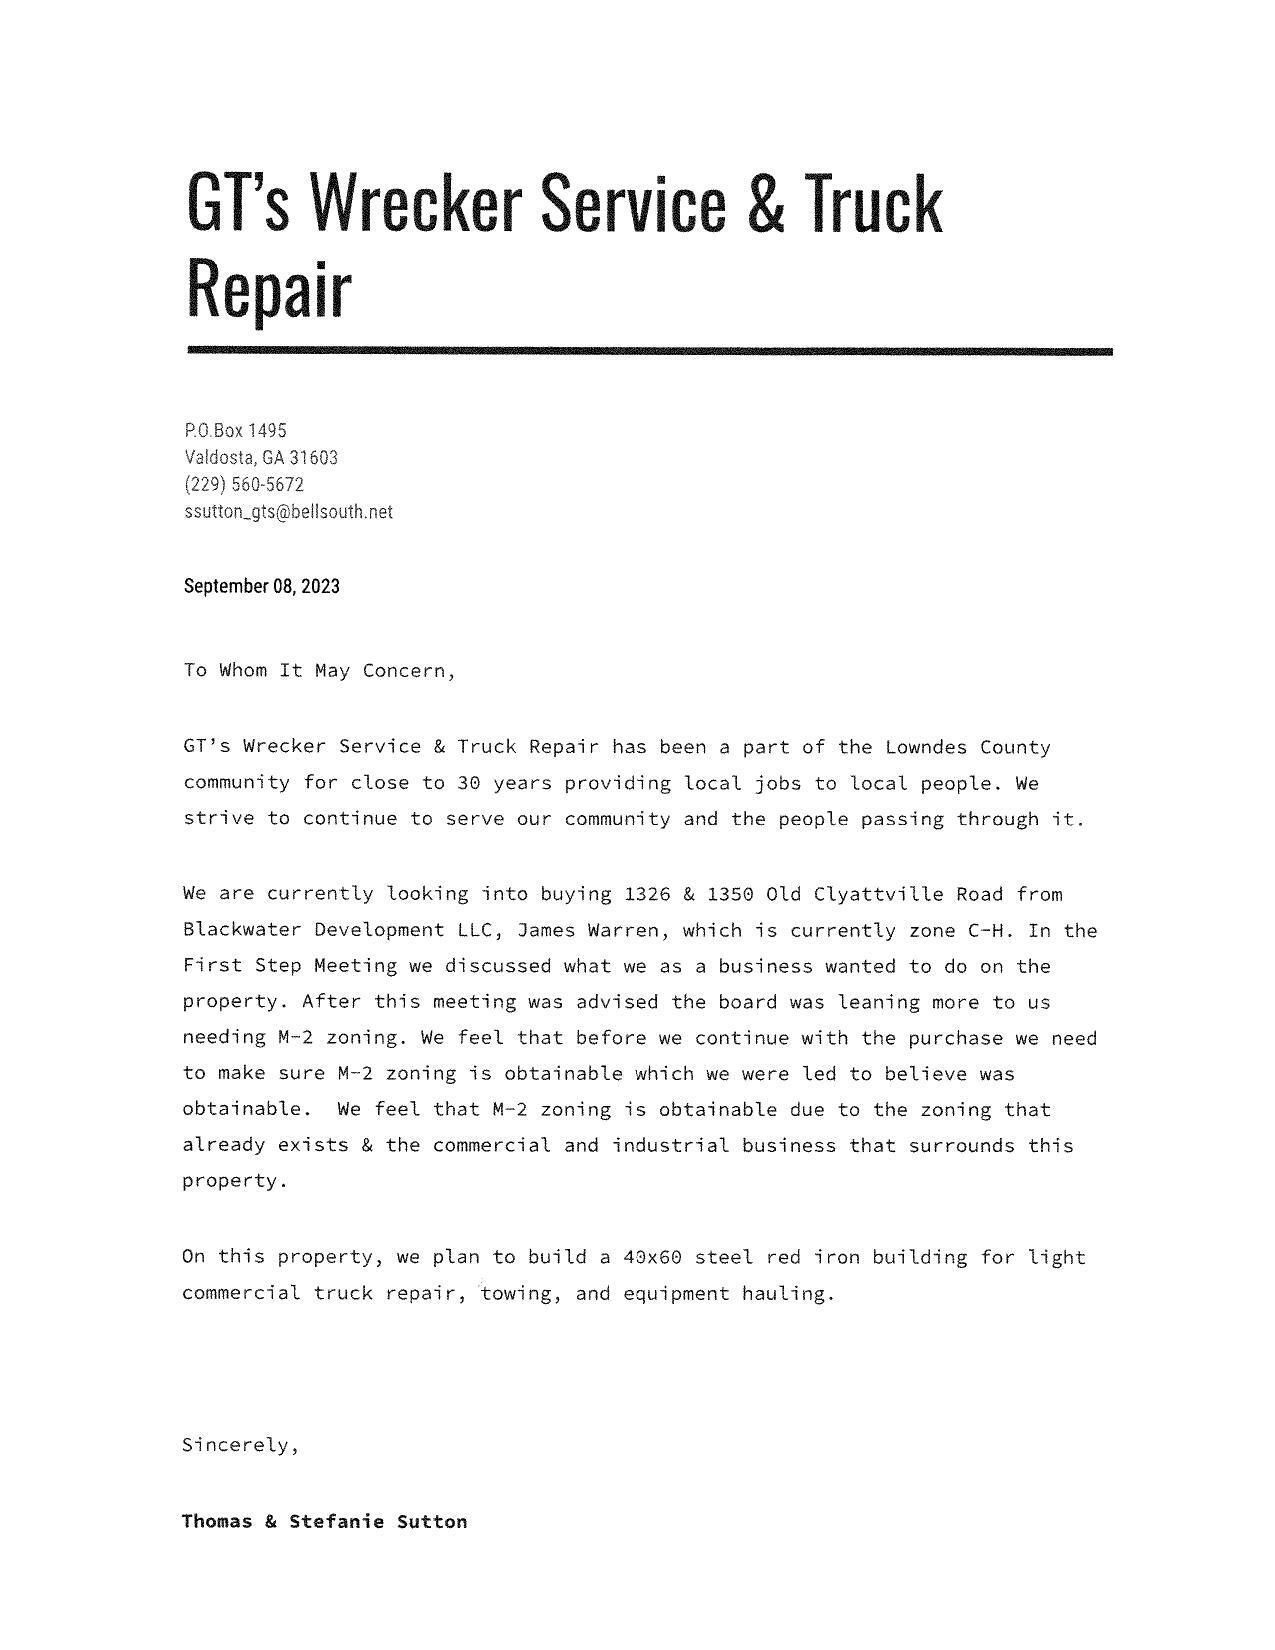 Letter from GT's Wrecker Service & Truck Repair